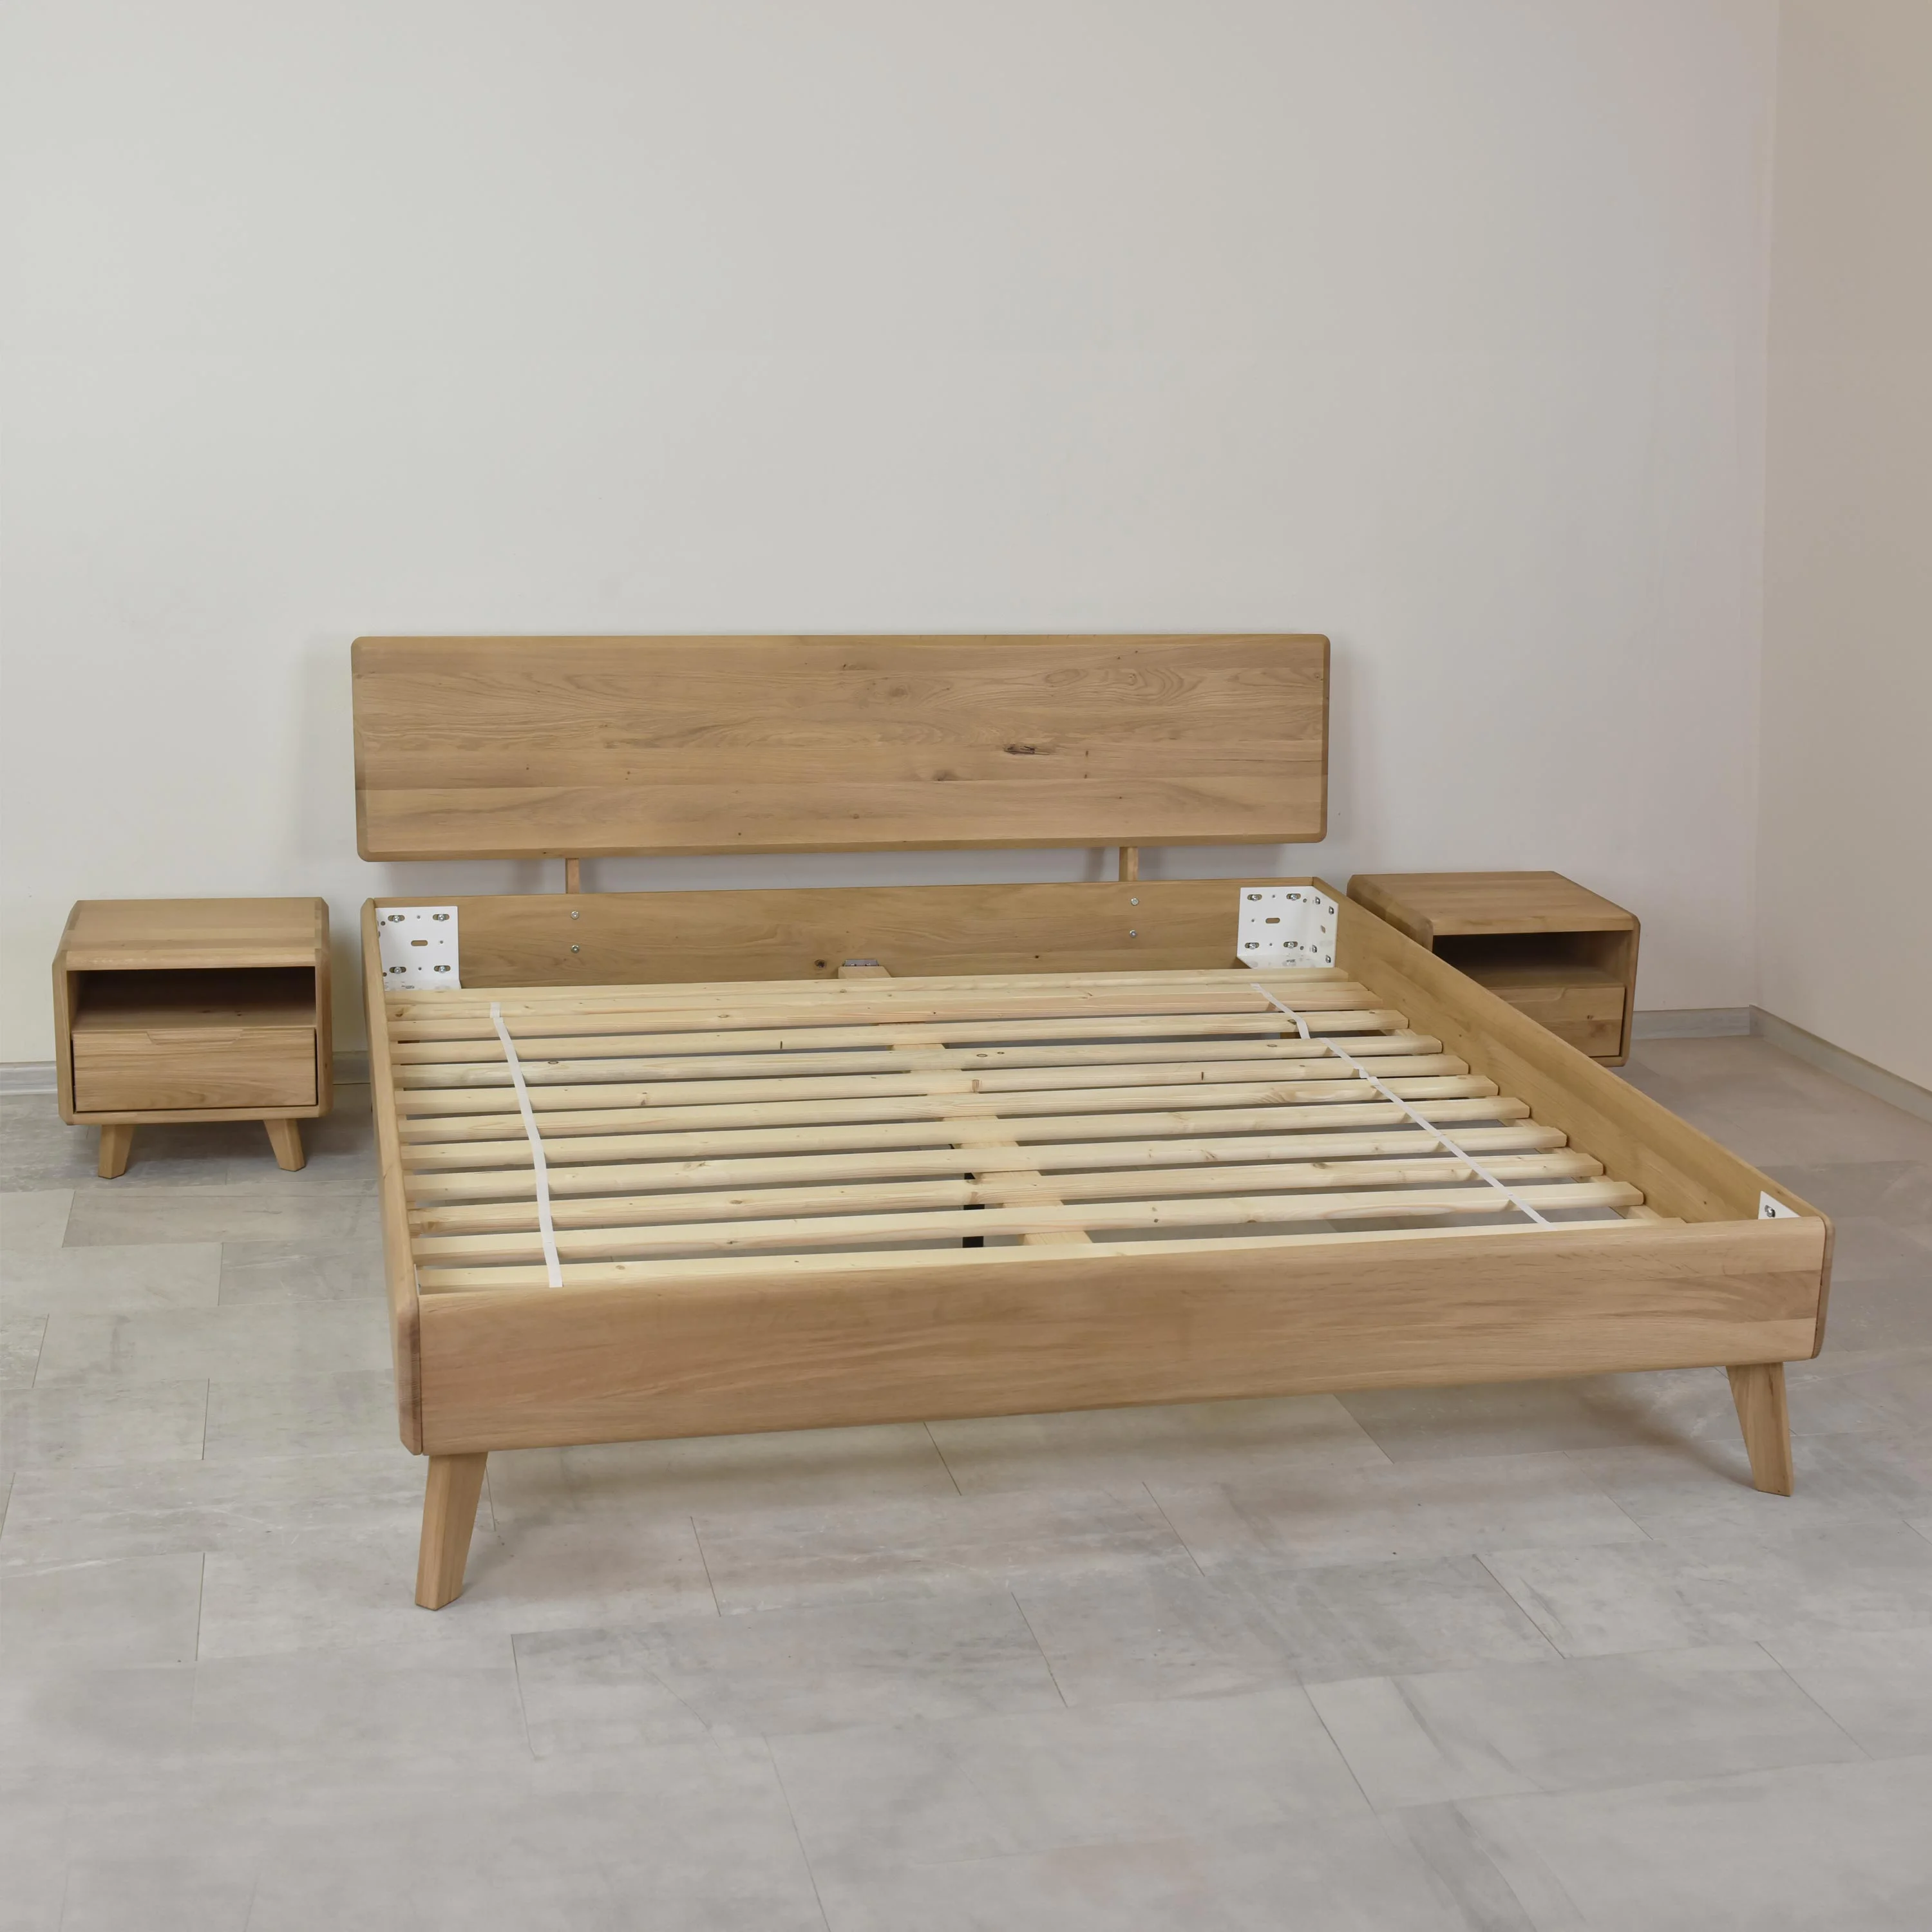 Manželská posteľ Bratislava 180 x 200 vyrobená z dubu 